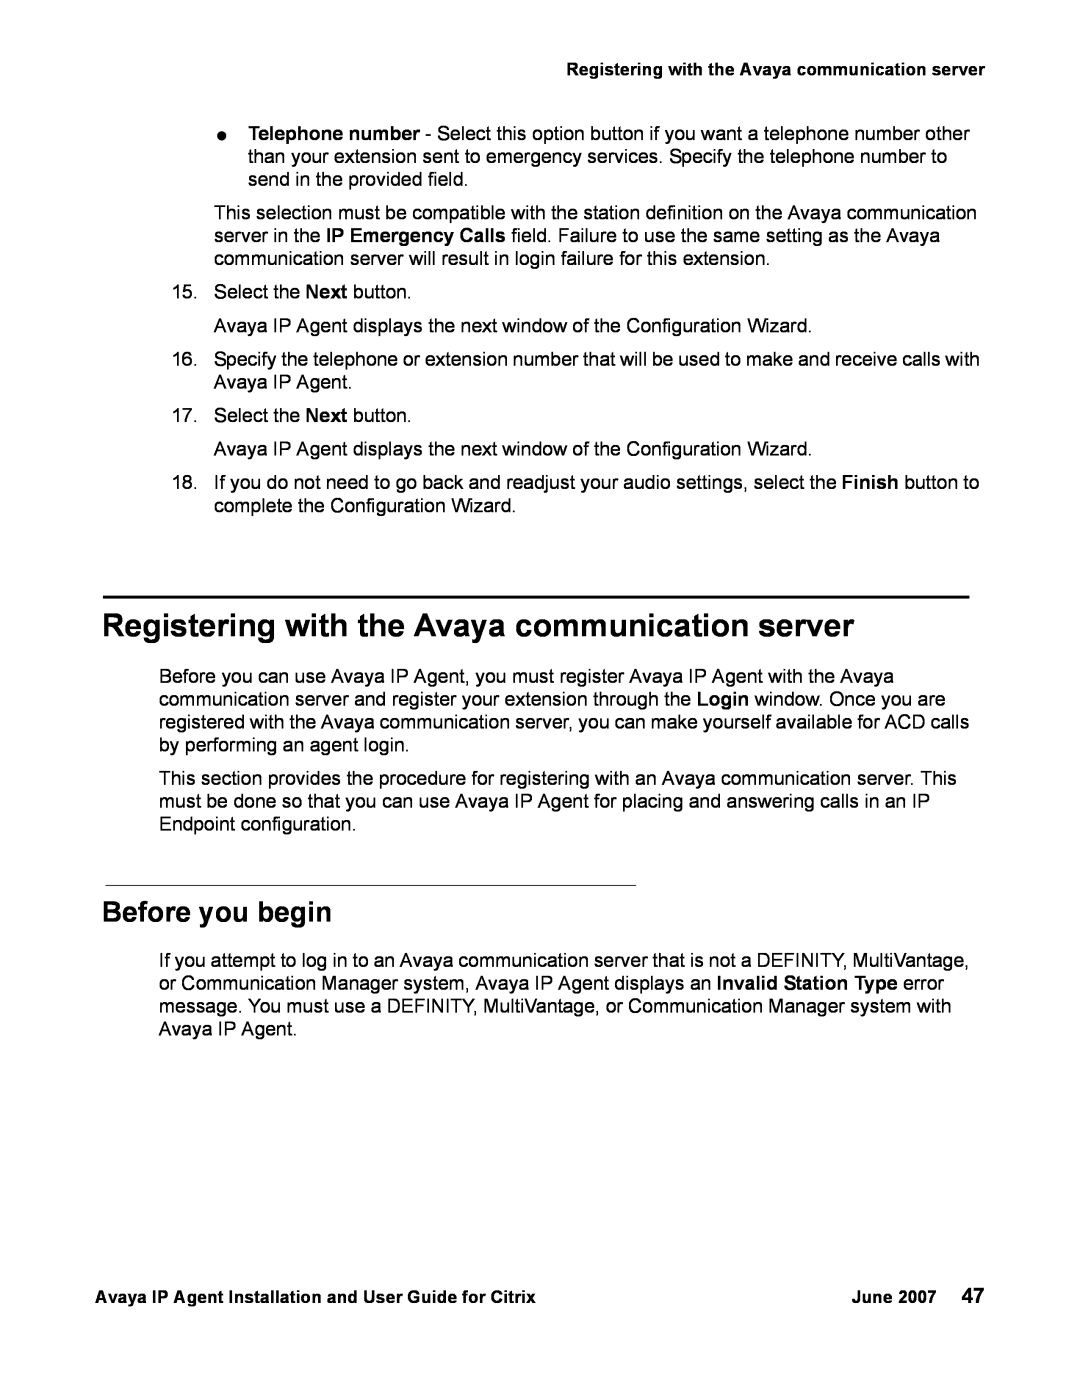 Avaya 7 manual Registering with the Avaya communication server, Before you begin 